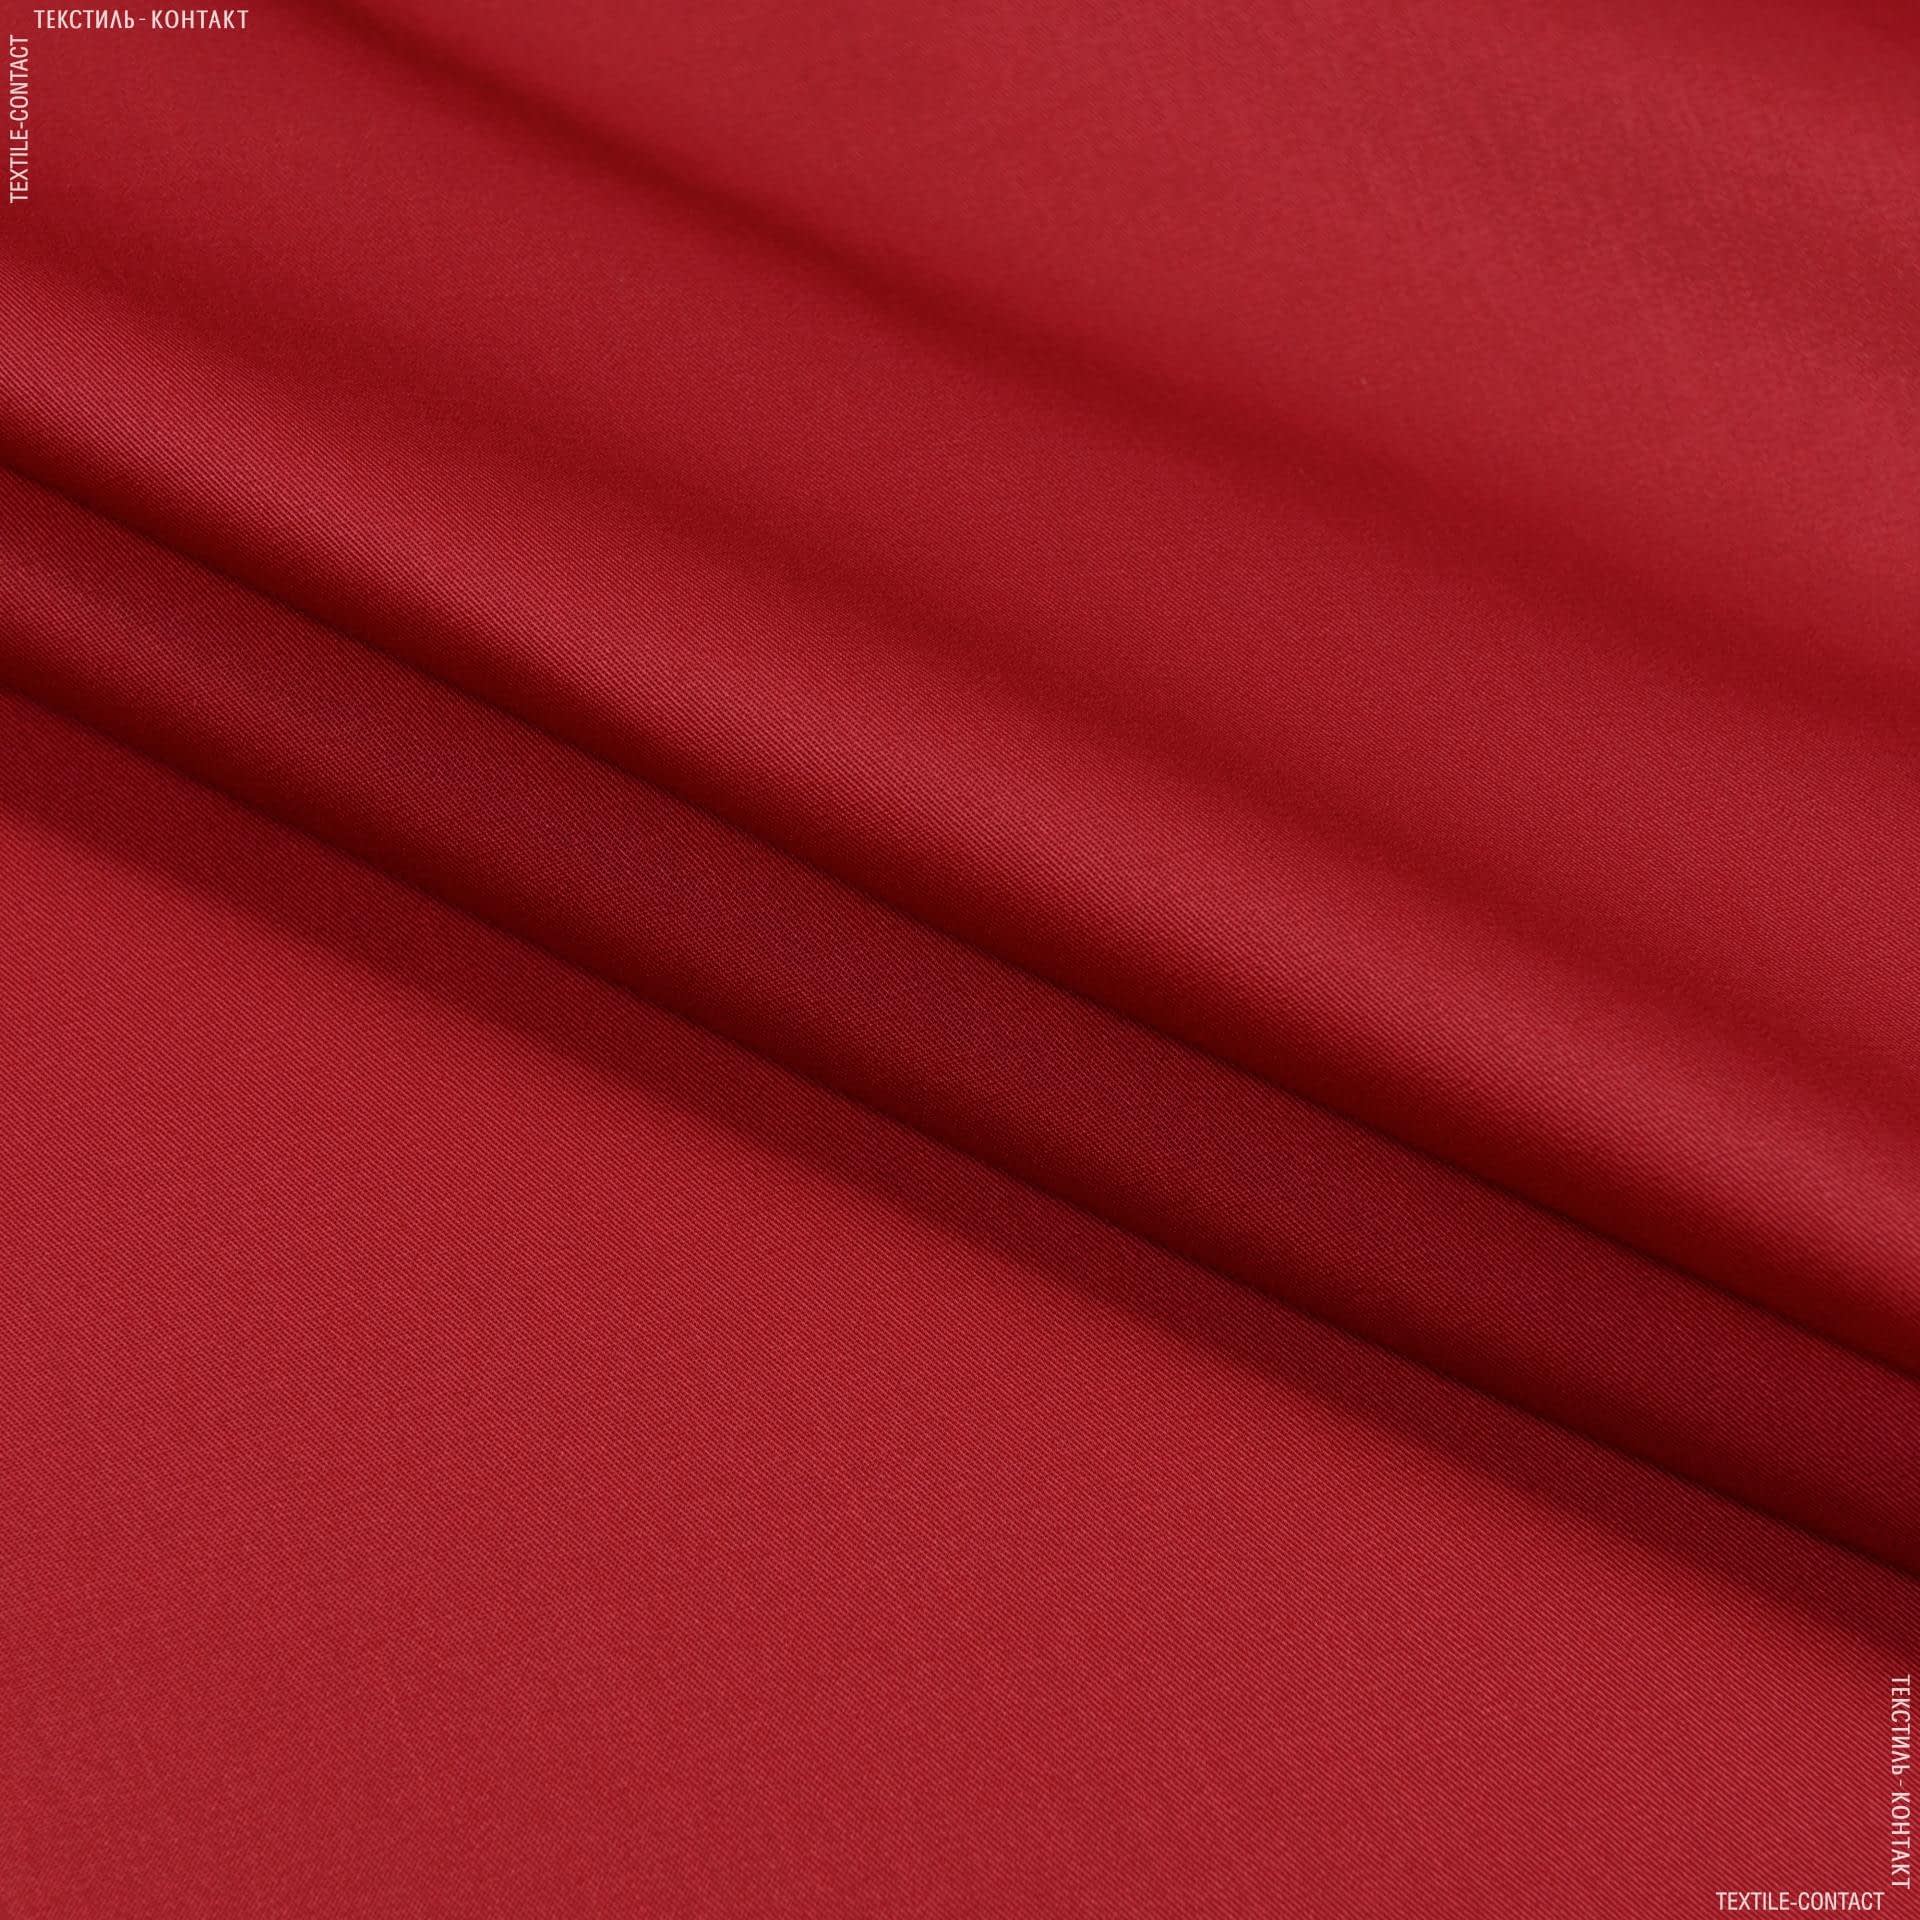 Тканини медичні тканини - Тканина для медичного одягу червона